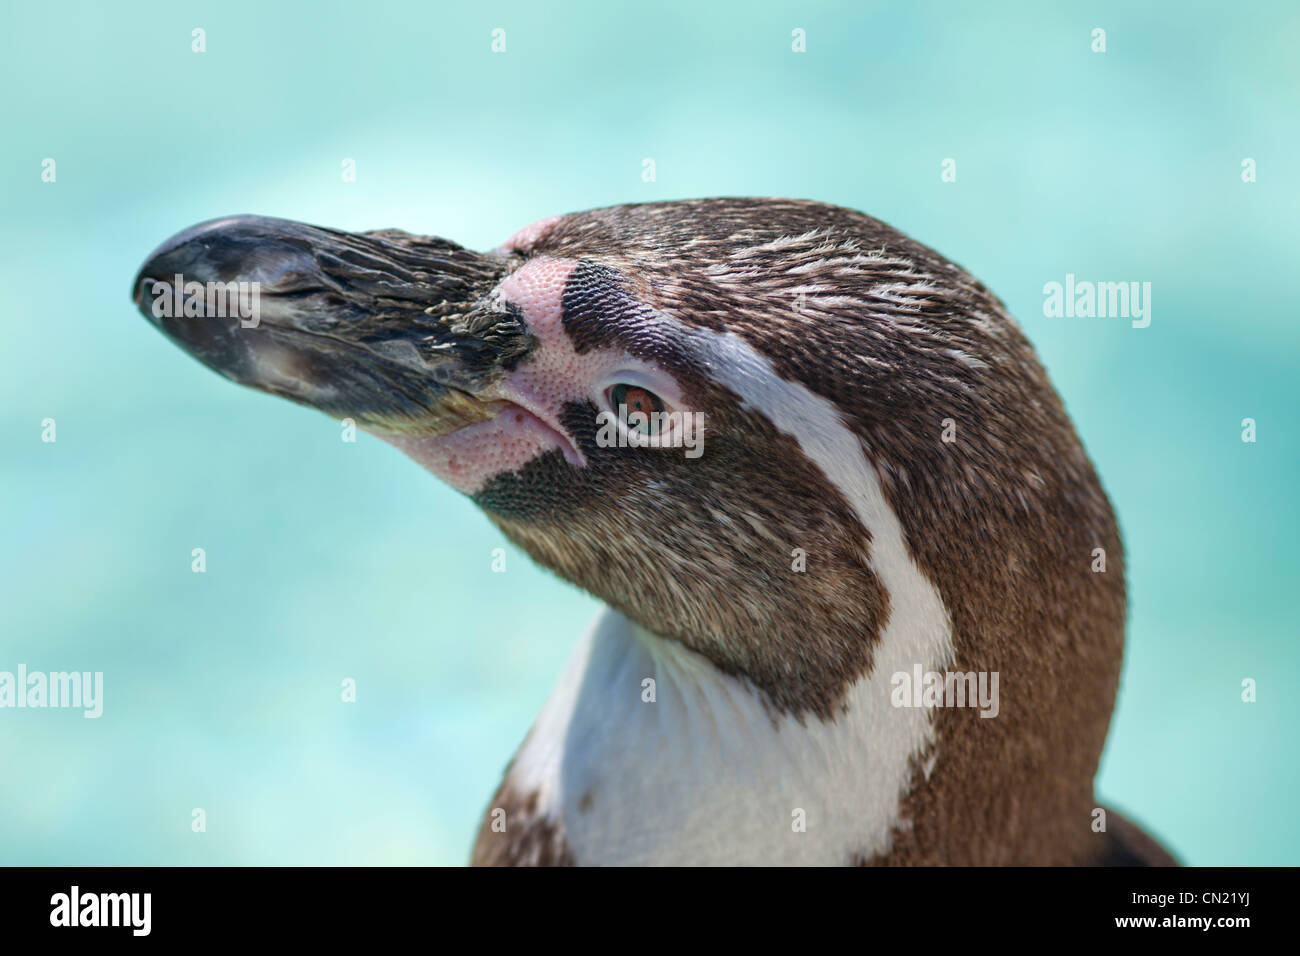 Humboldt penguin - Spheniscus humboldti Stock Photo